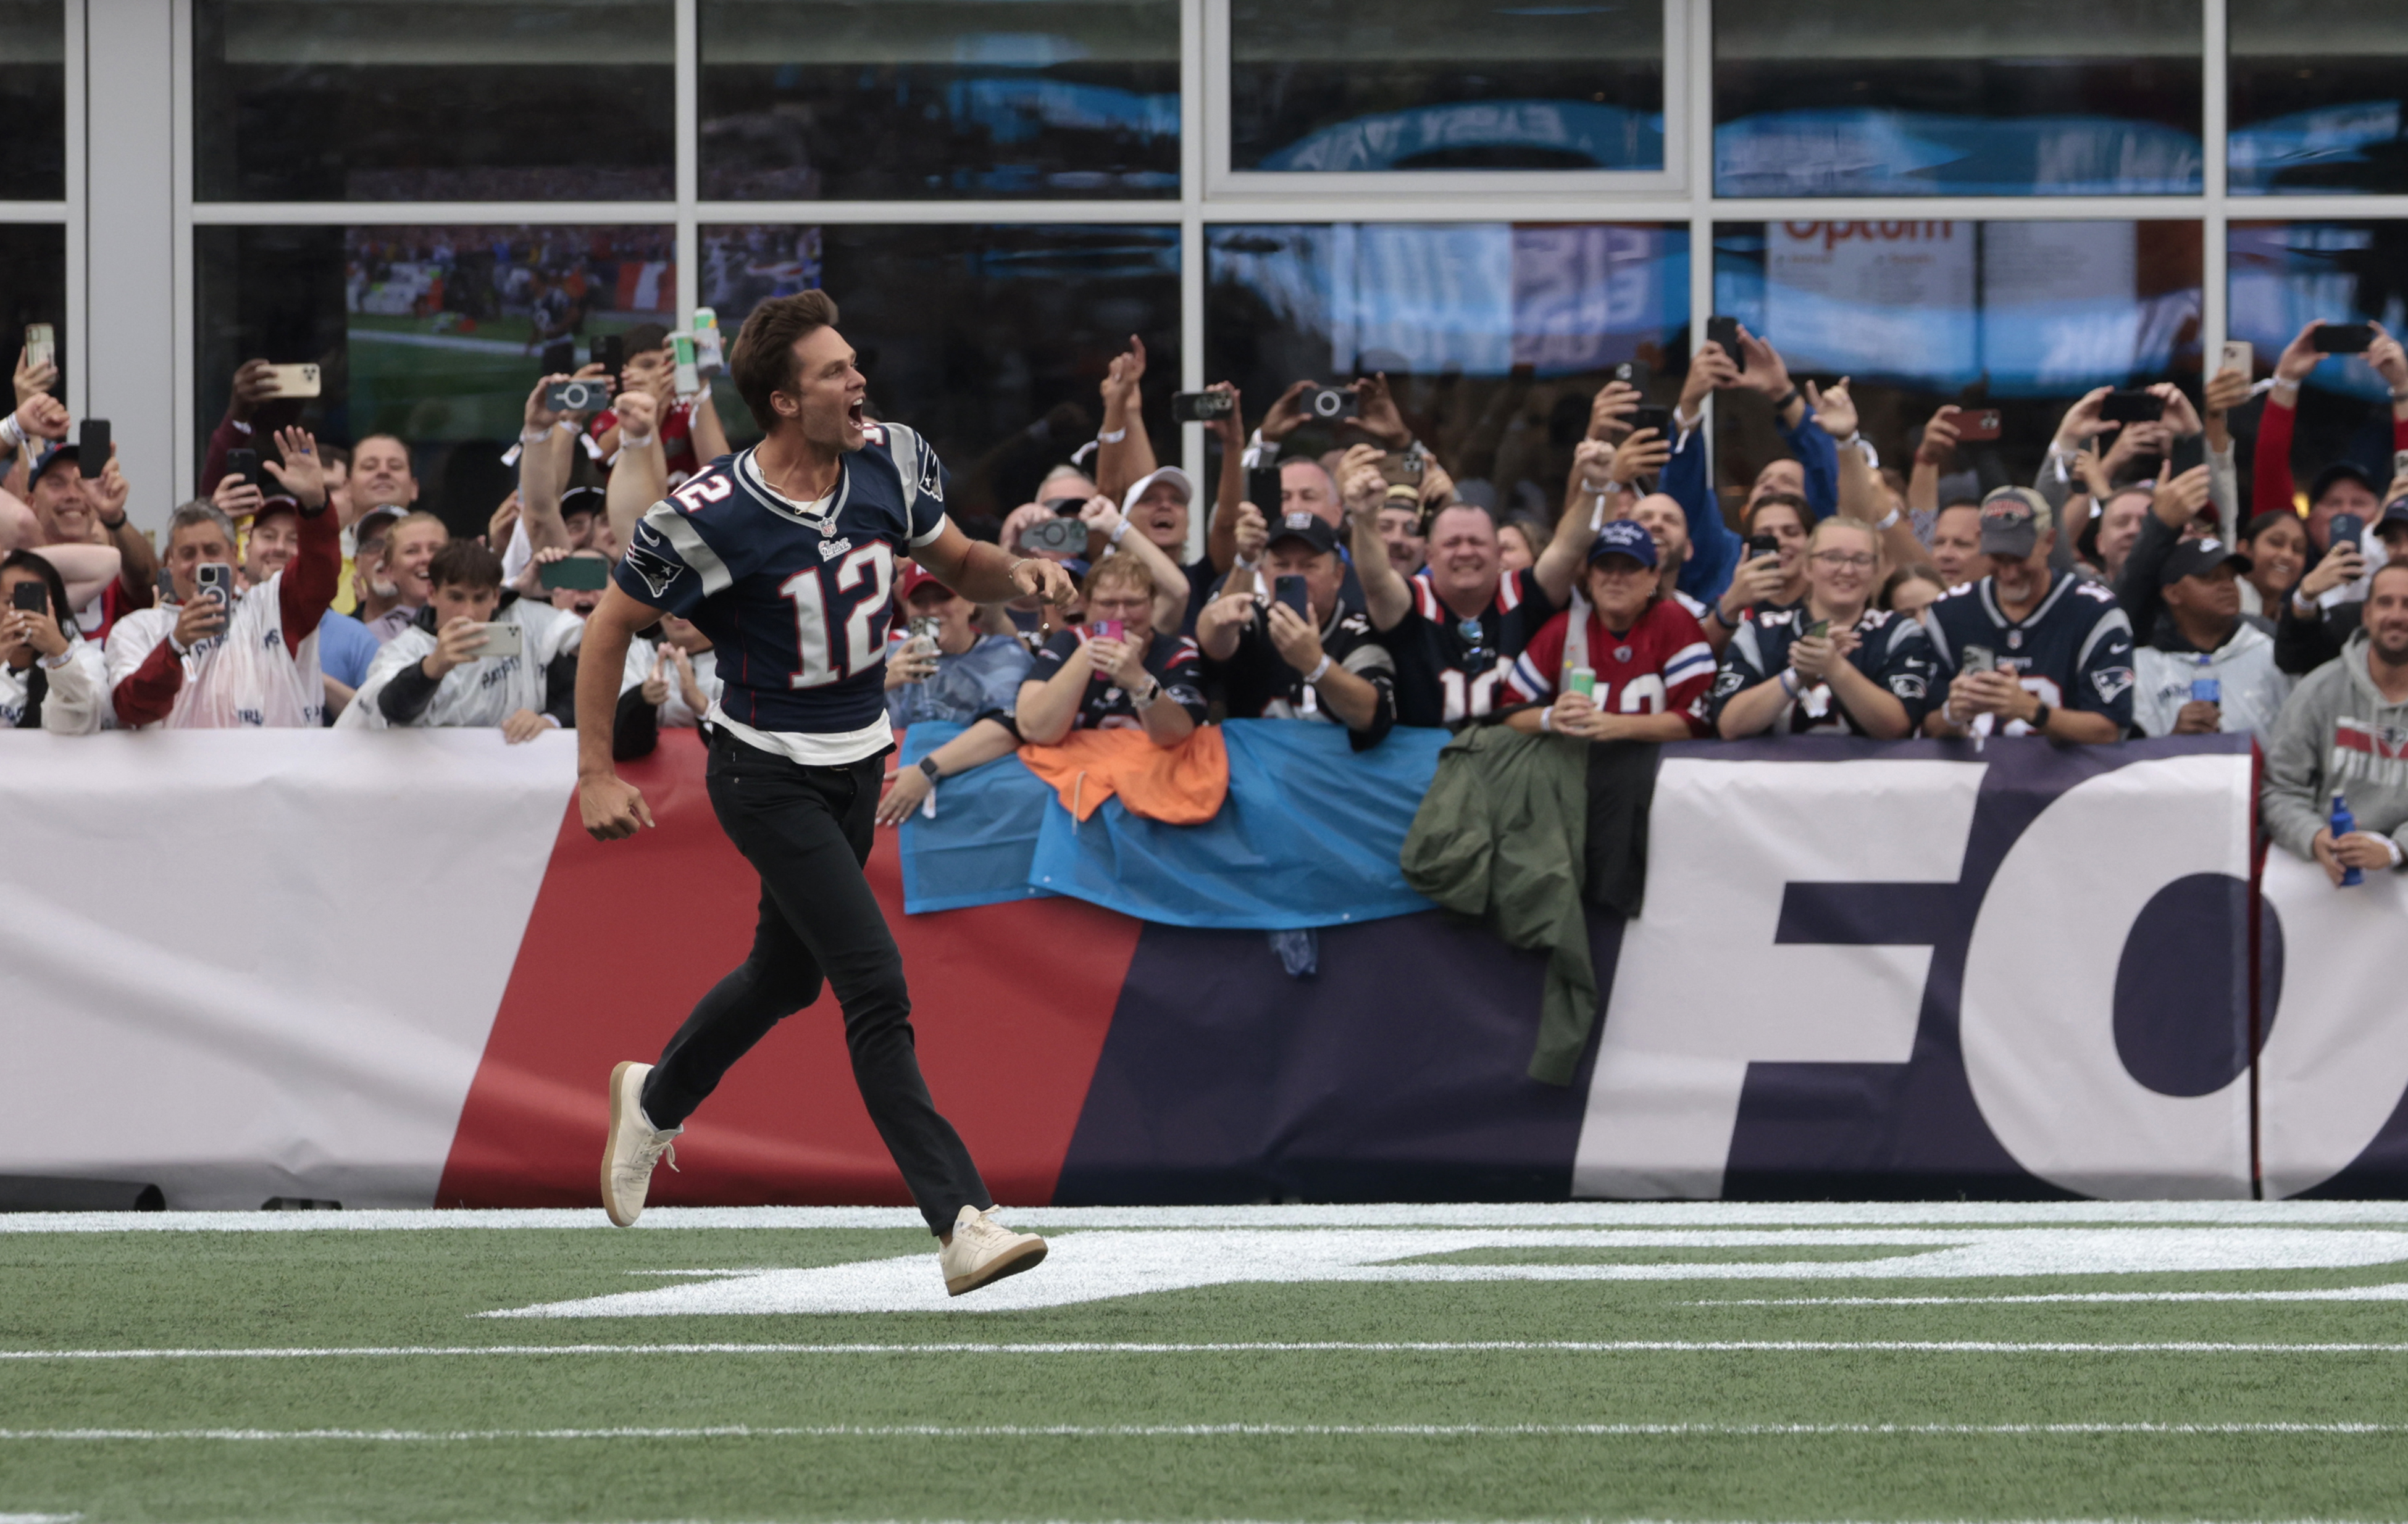 Brady's Super Bowl XLIX jersey coming to Foxboro